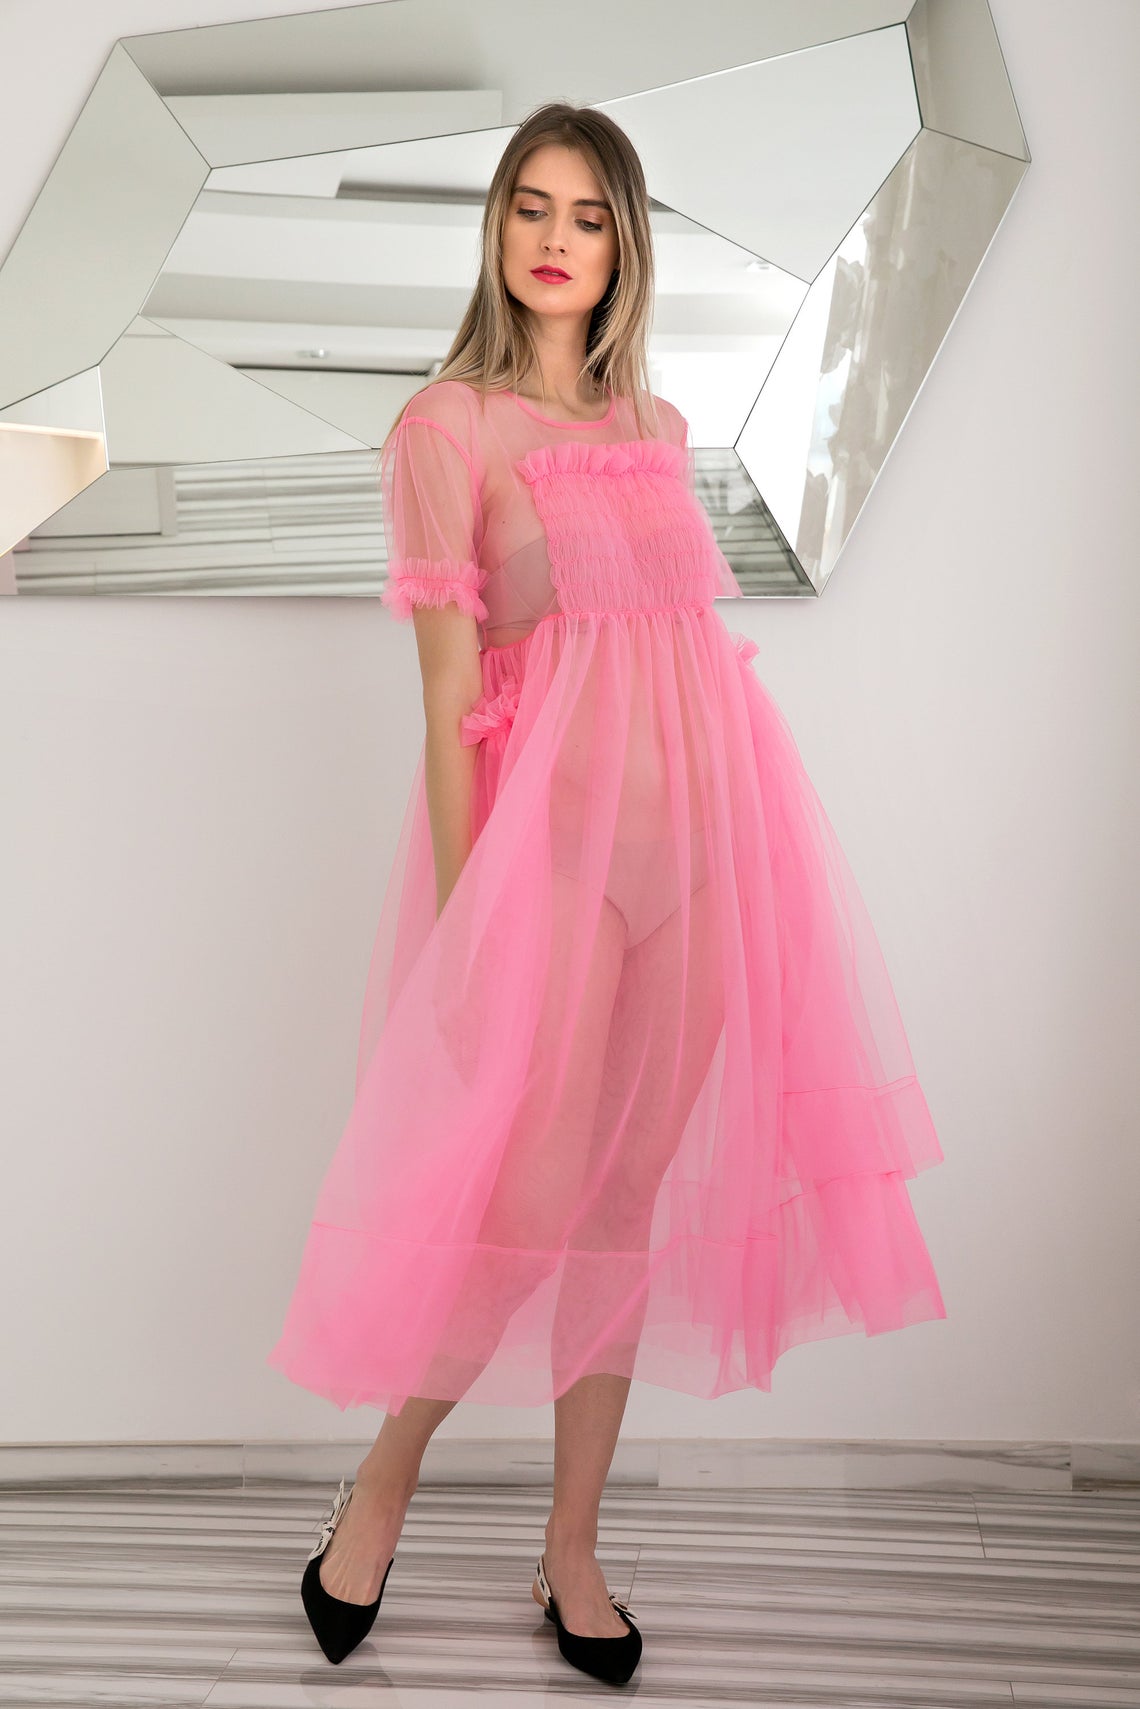 https://www.allseams.com/wp-content/uploads/2021/02/Sheer-Pink-Dress-1.jpg